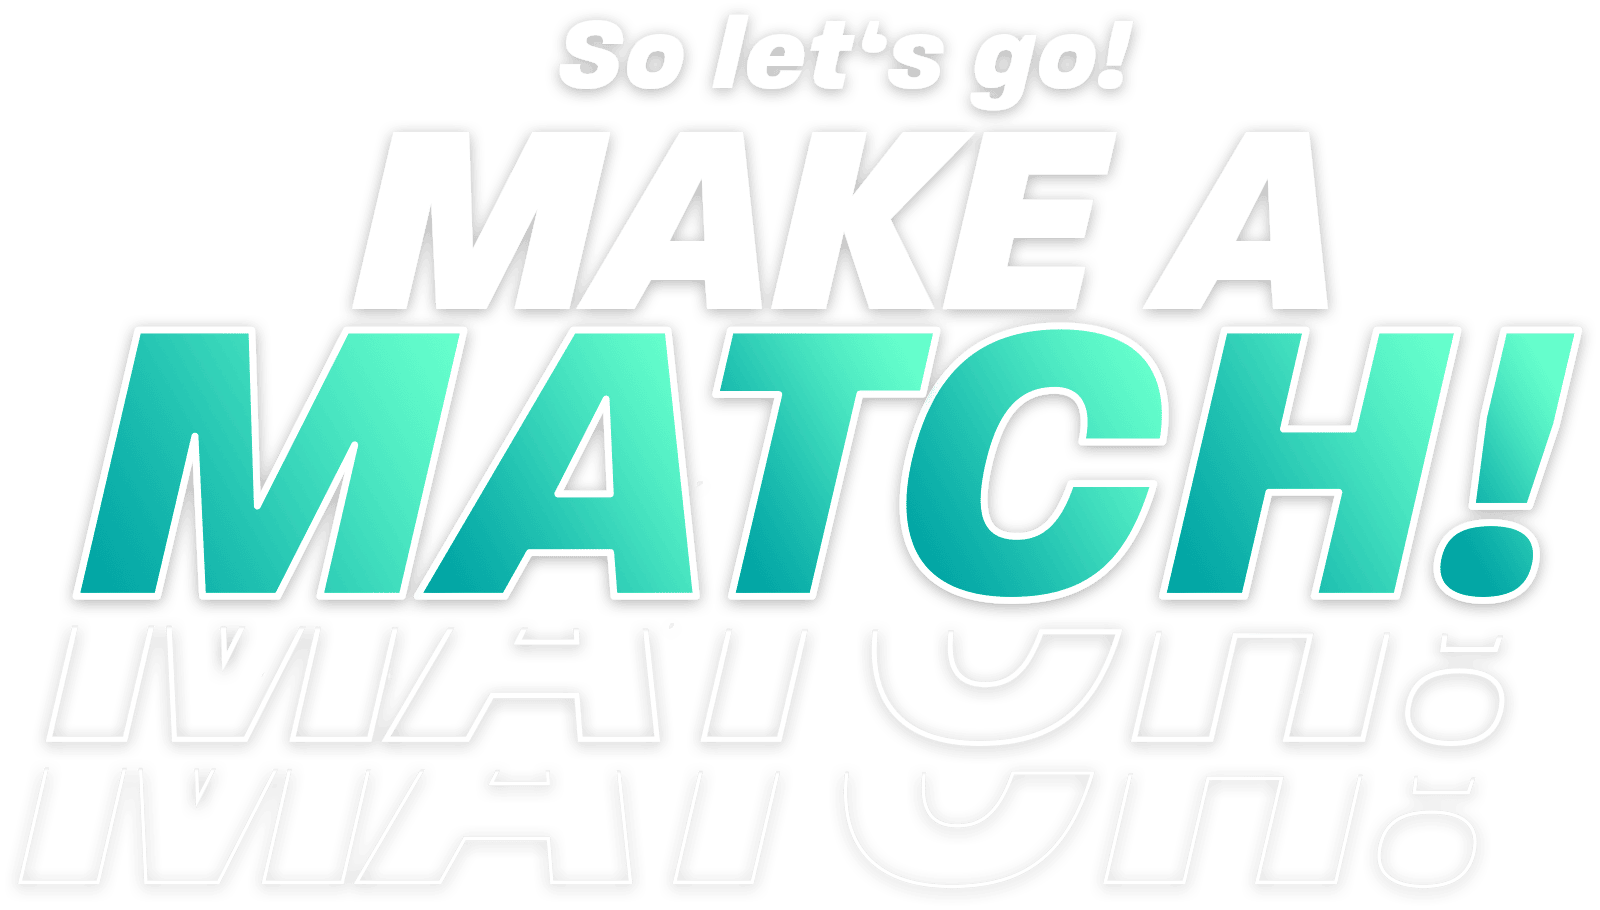 So let‘s go! Make a match!